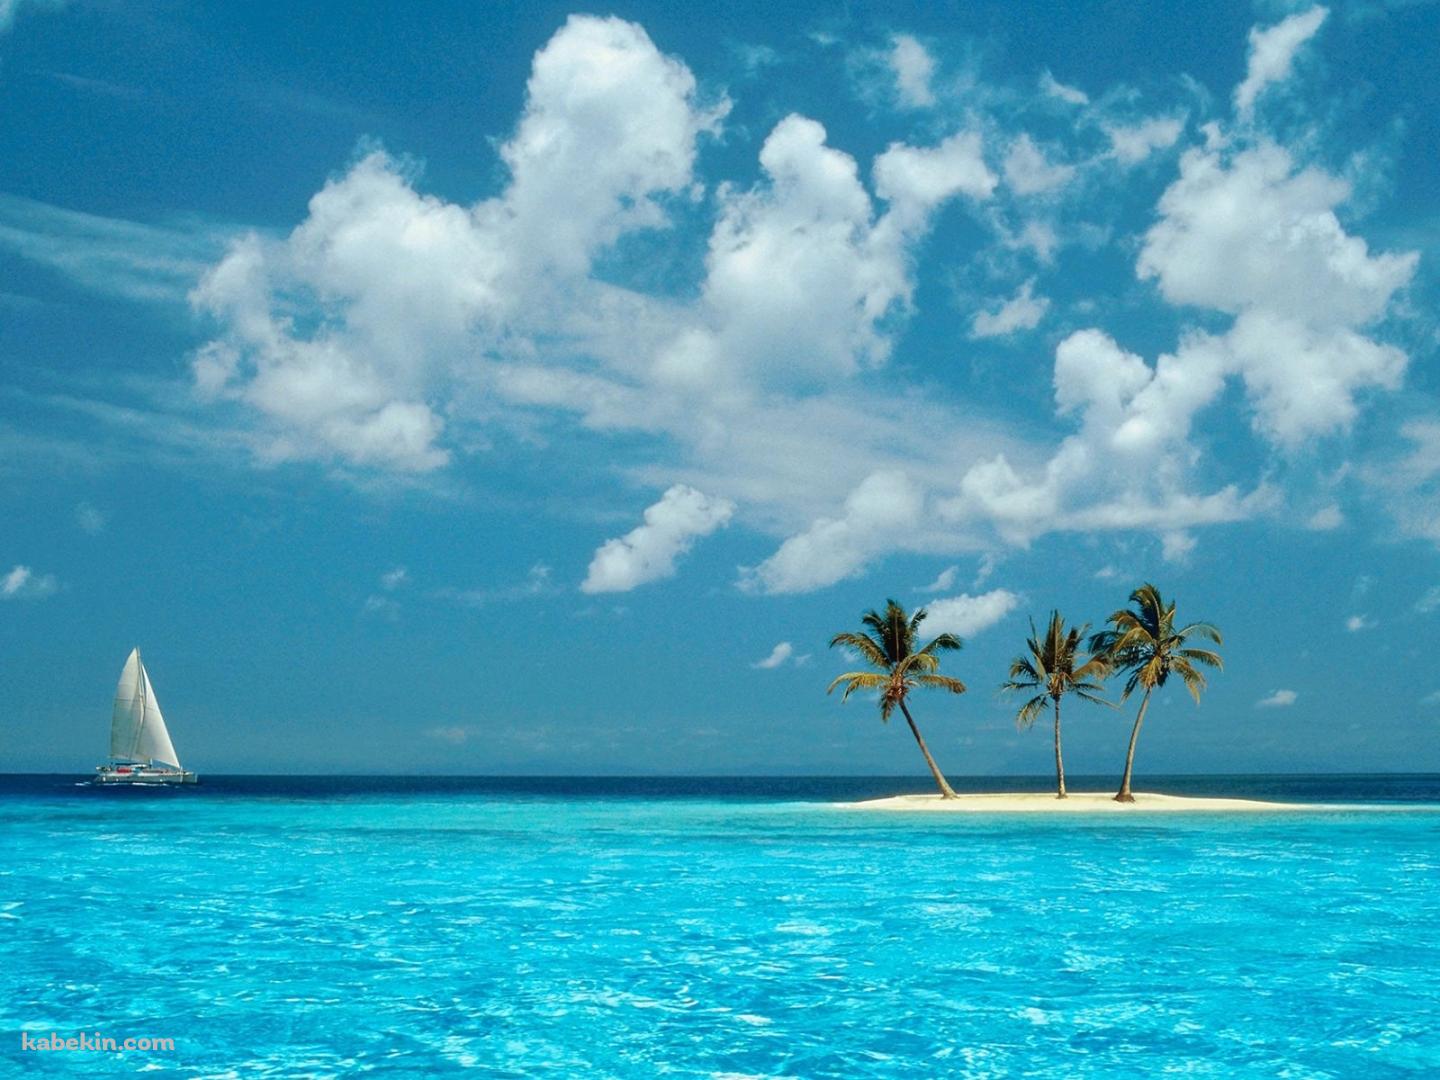 windows xp 綺麗なビーチとヨットと椰子の木の壁紙(1440px x 1080px) 高画質 PC・デスクトップ用